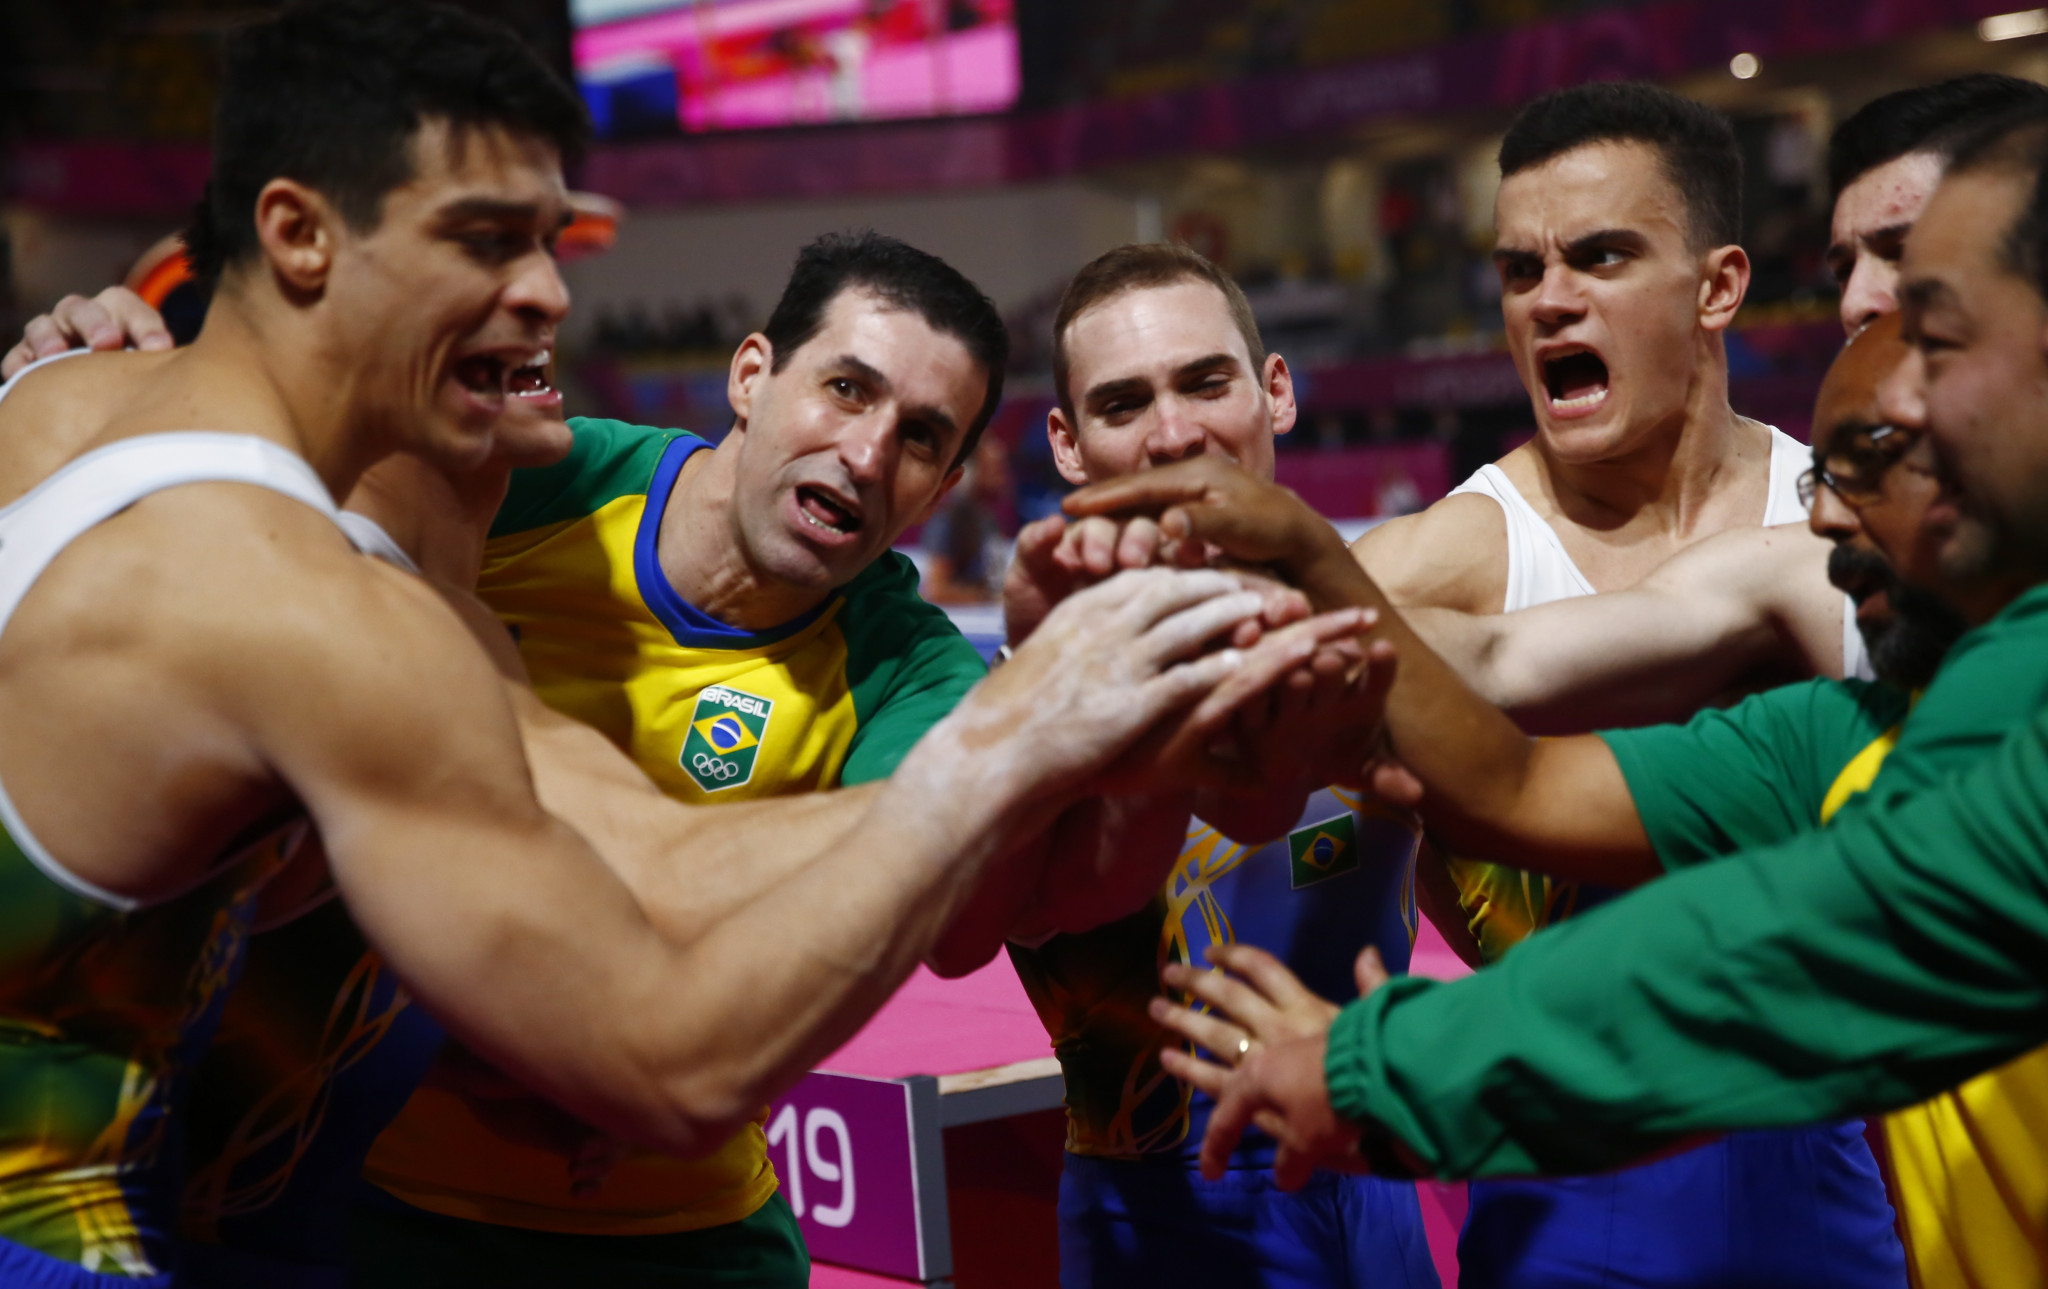 Brazil struck gold in the men's team gymnastics final ©Lima 2019